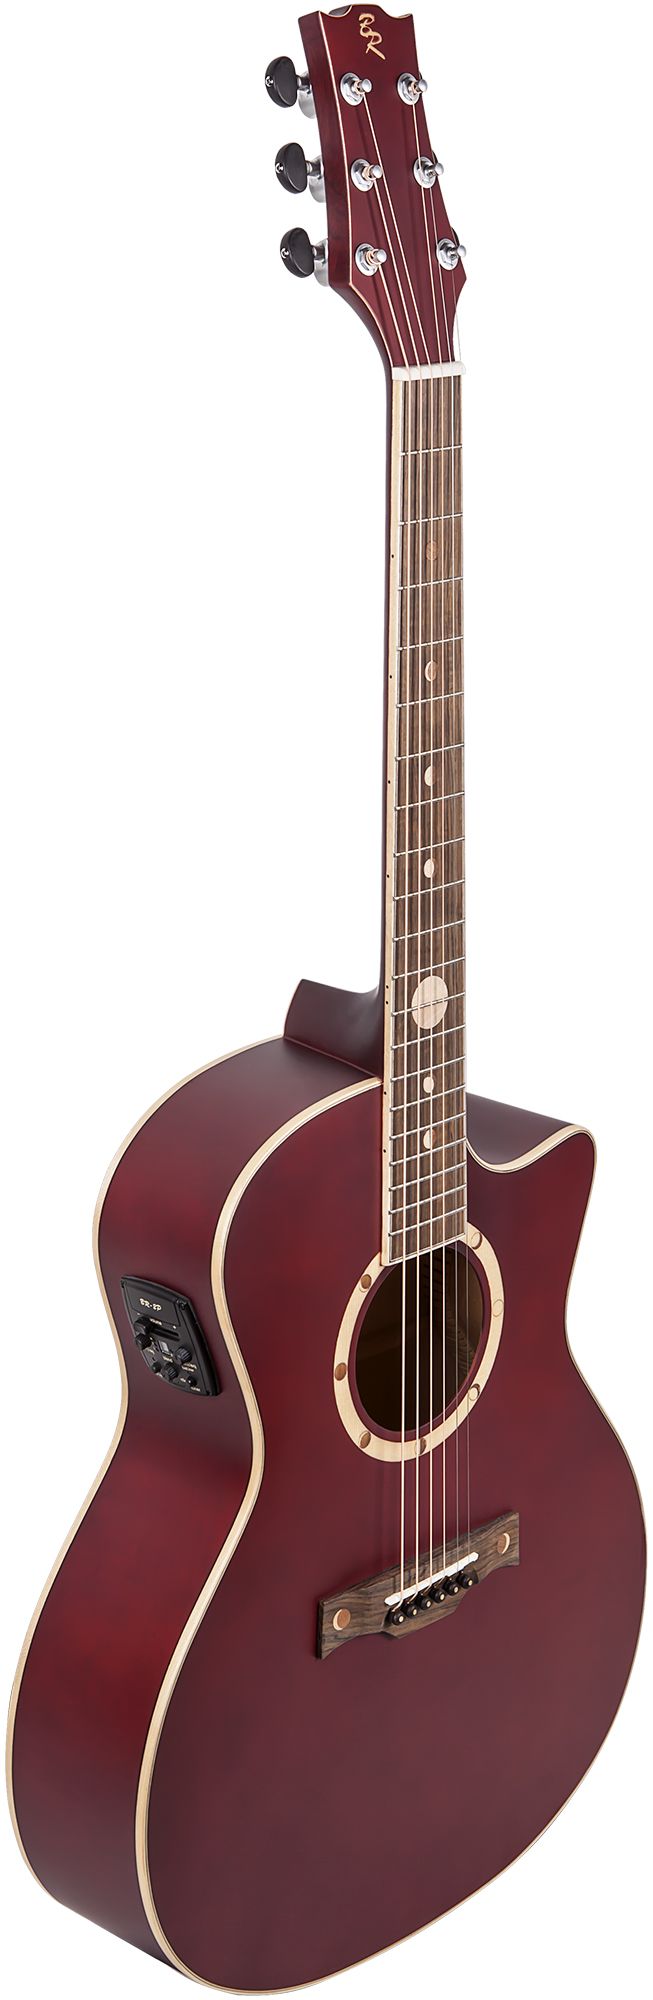 Электрокустическая гитара BATON ROUGE X2S/ACE red moon.